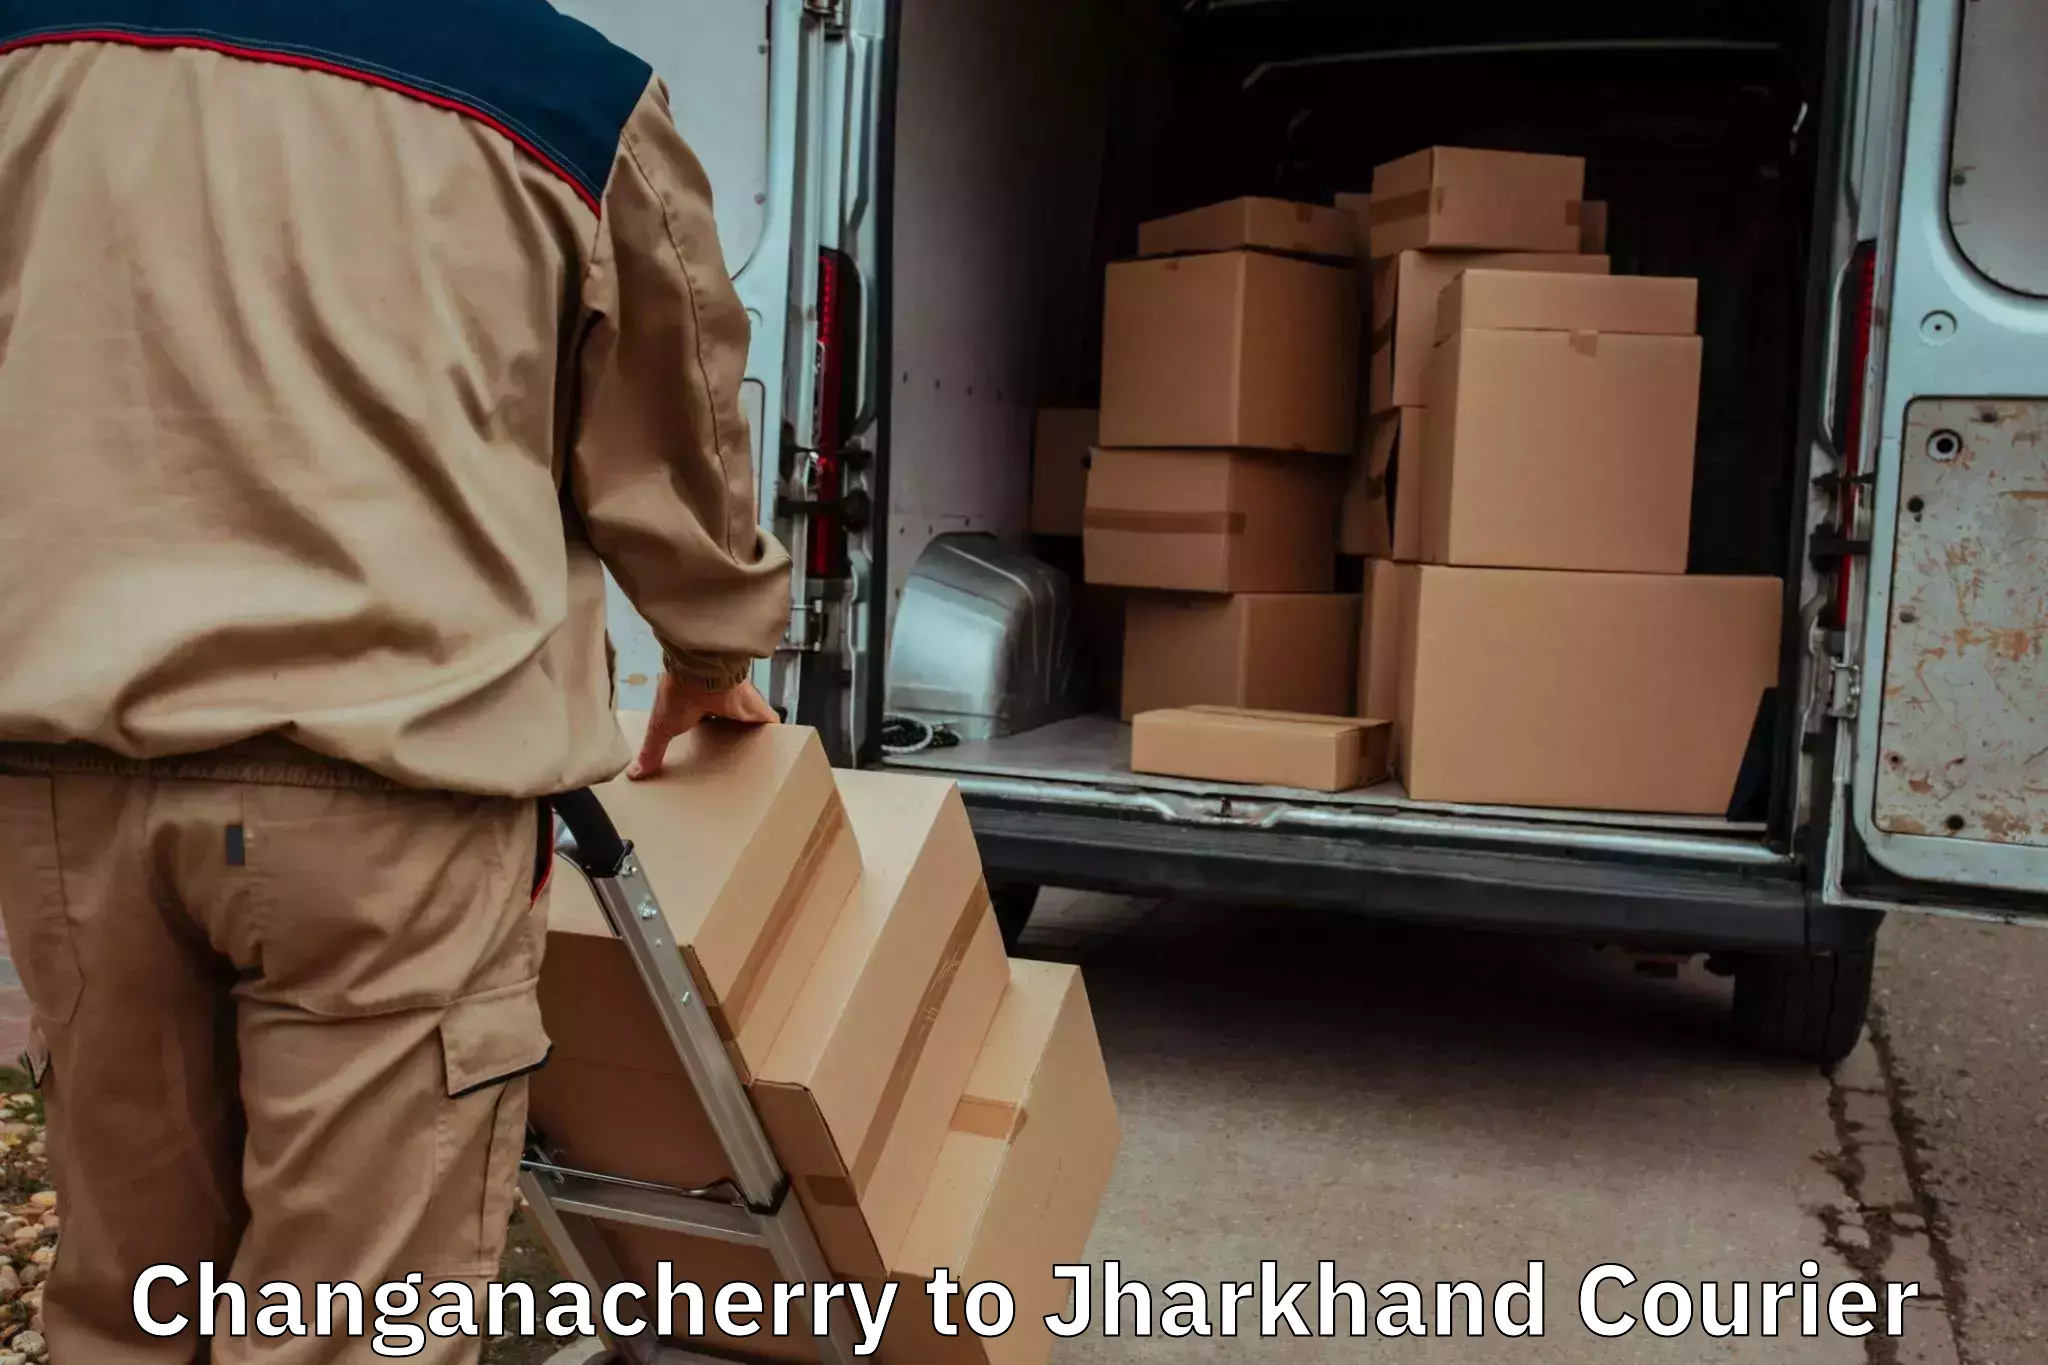 Professional moving company Changanacherry to Rajdhanwar